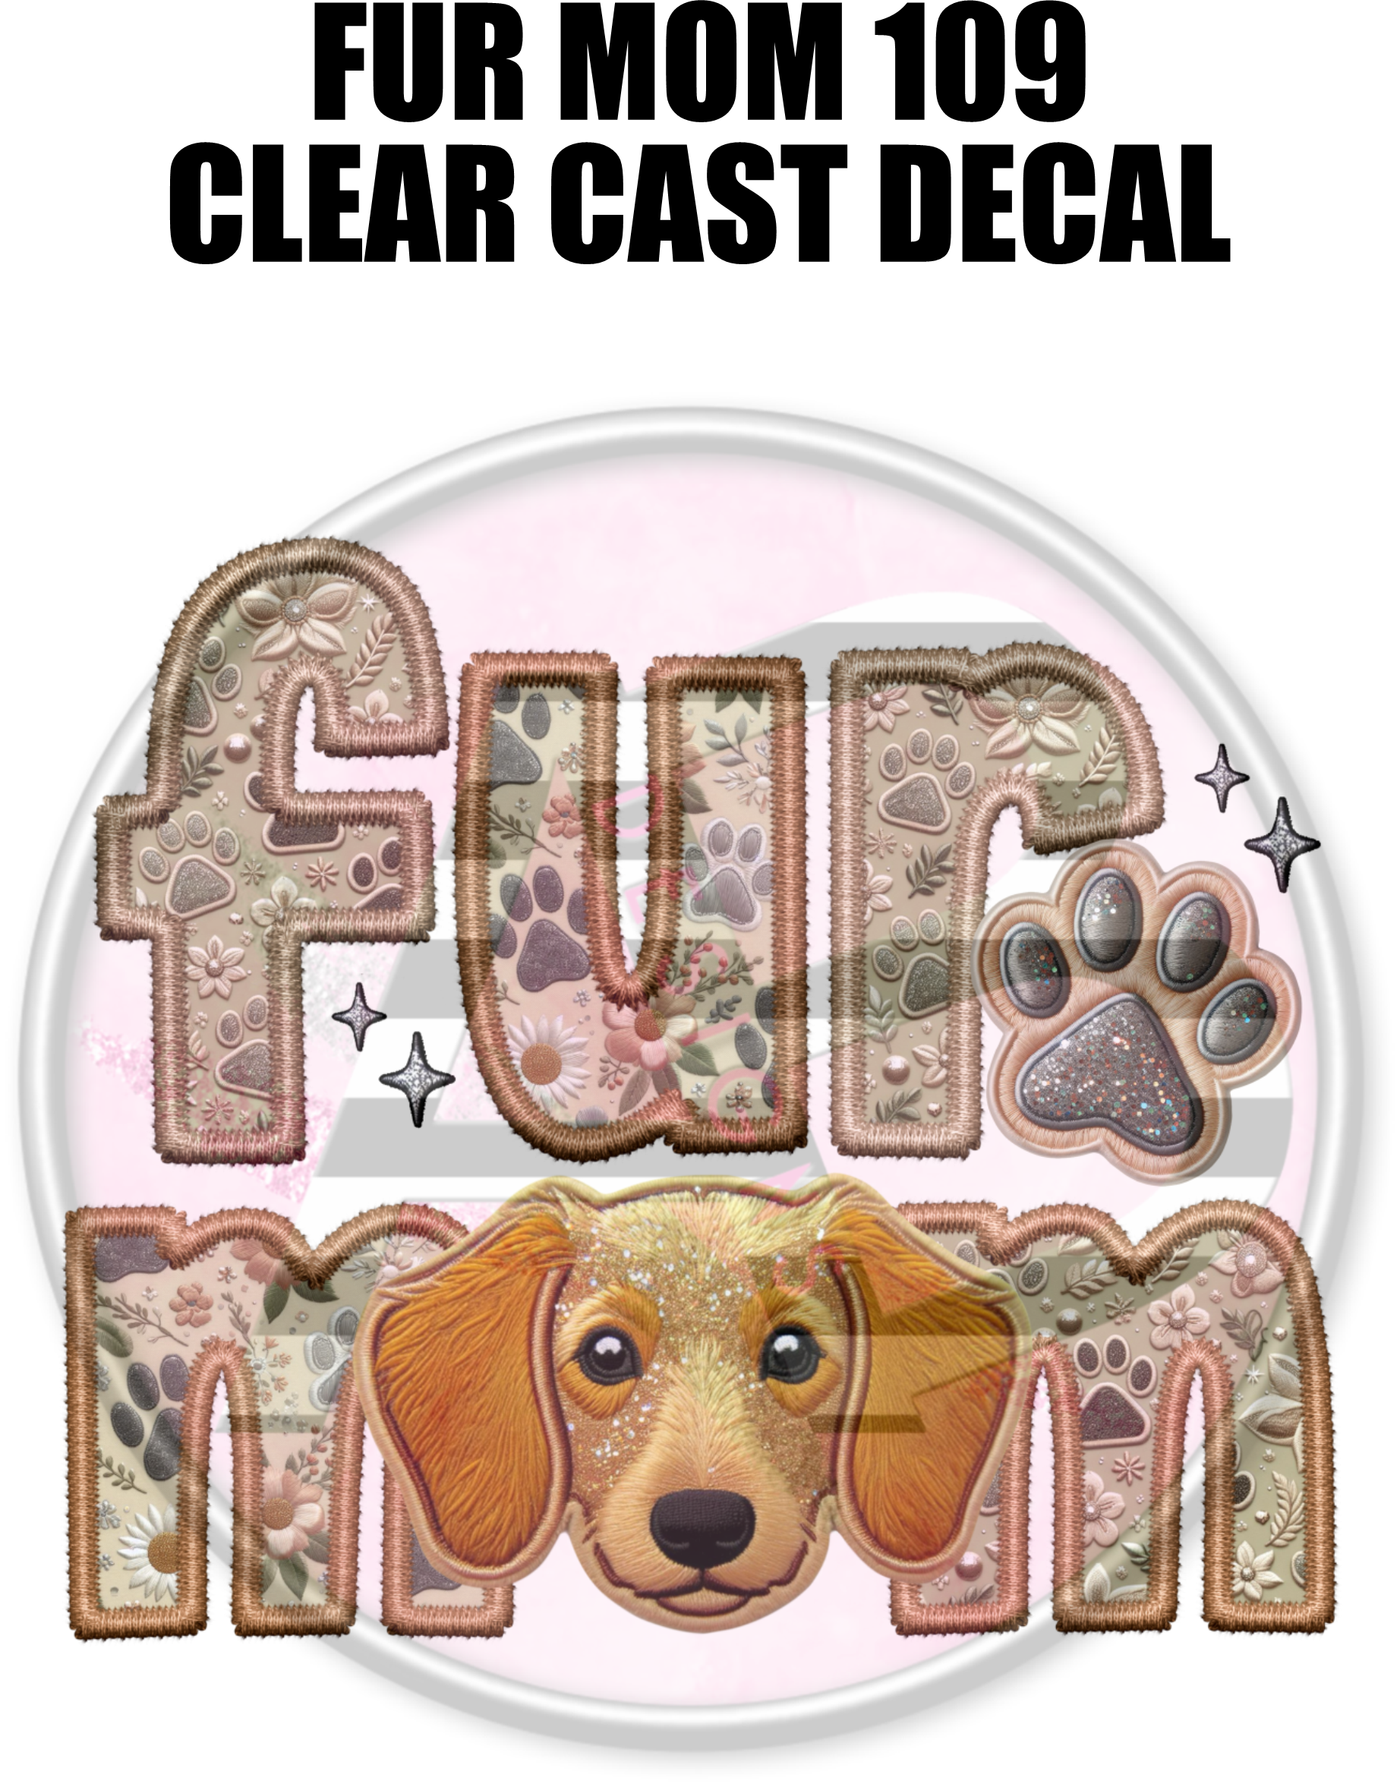 Fur Mom 109 - Clear Cast Decal